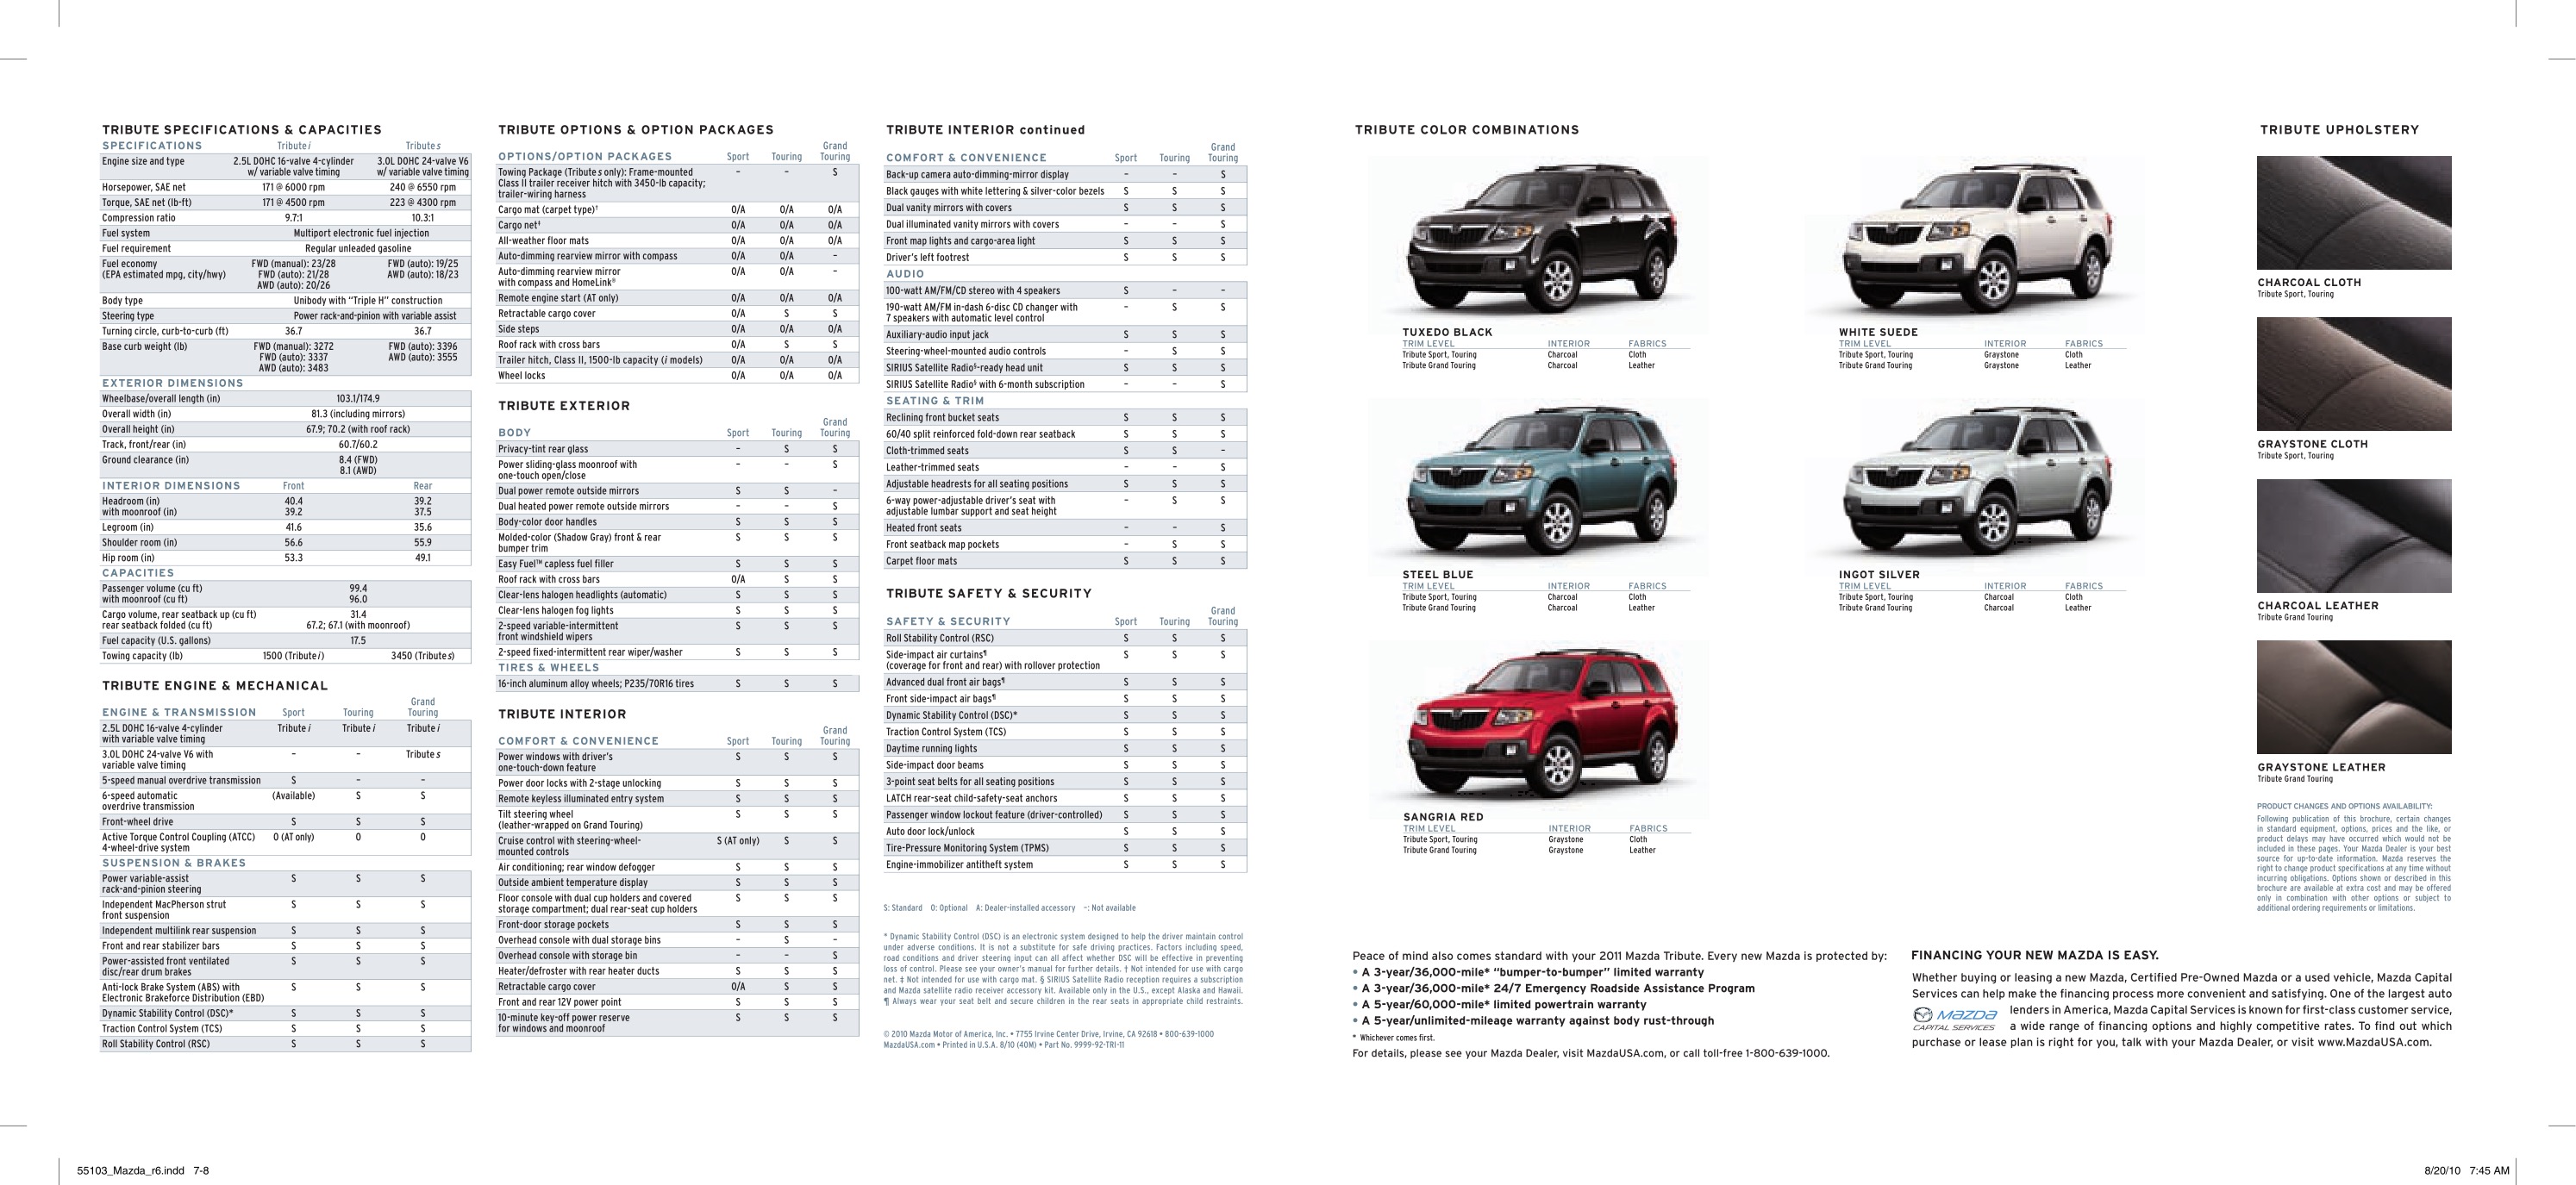 2011 Mazda Tribute Brochure Page 2